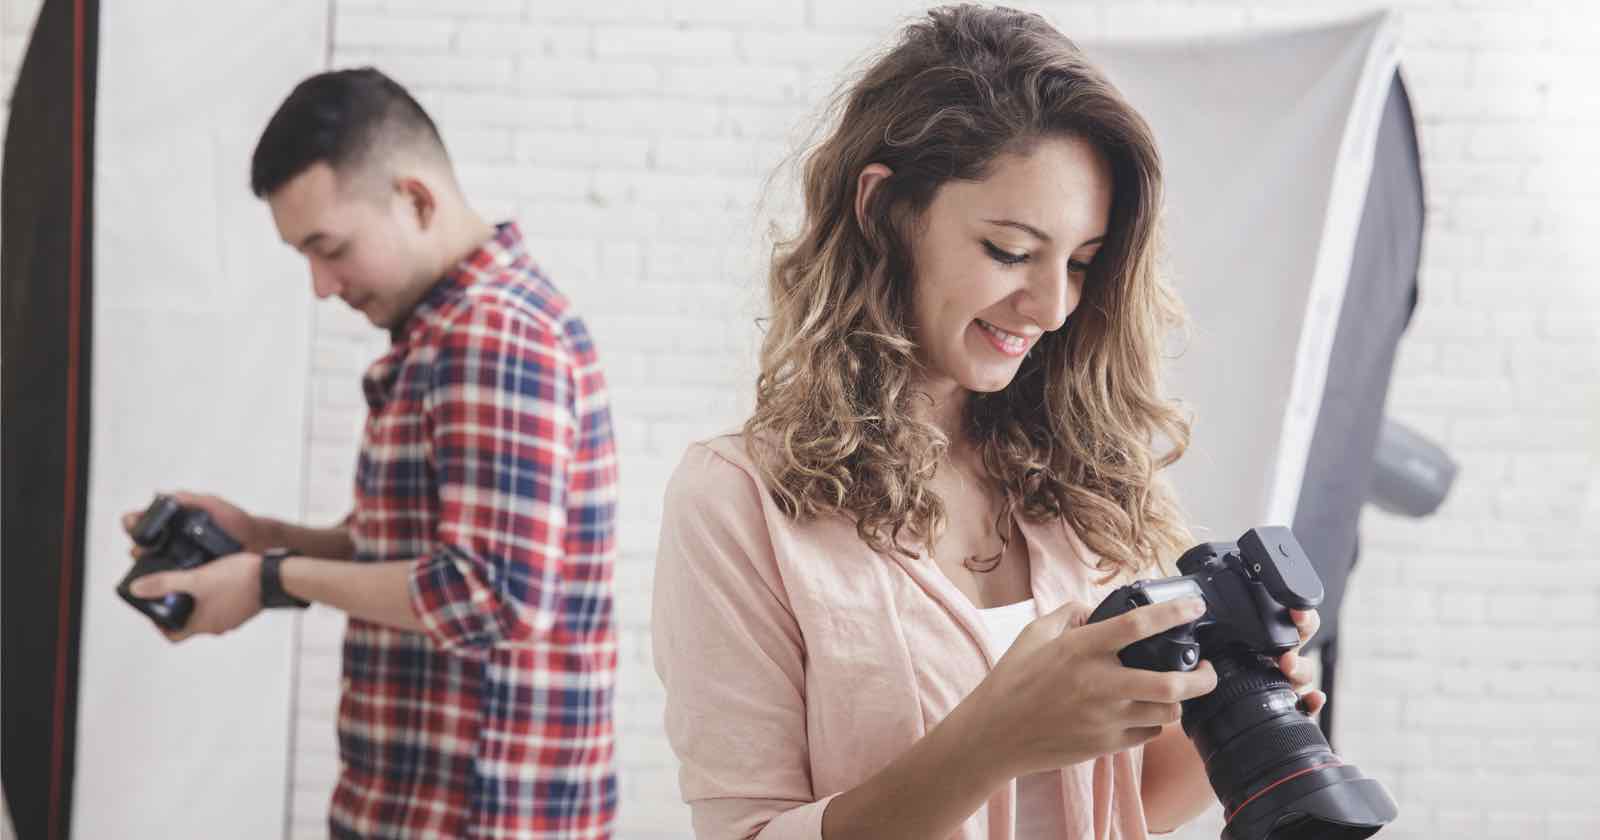  male freelance photographers earn more than female peers 